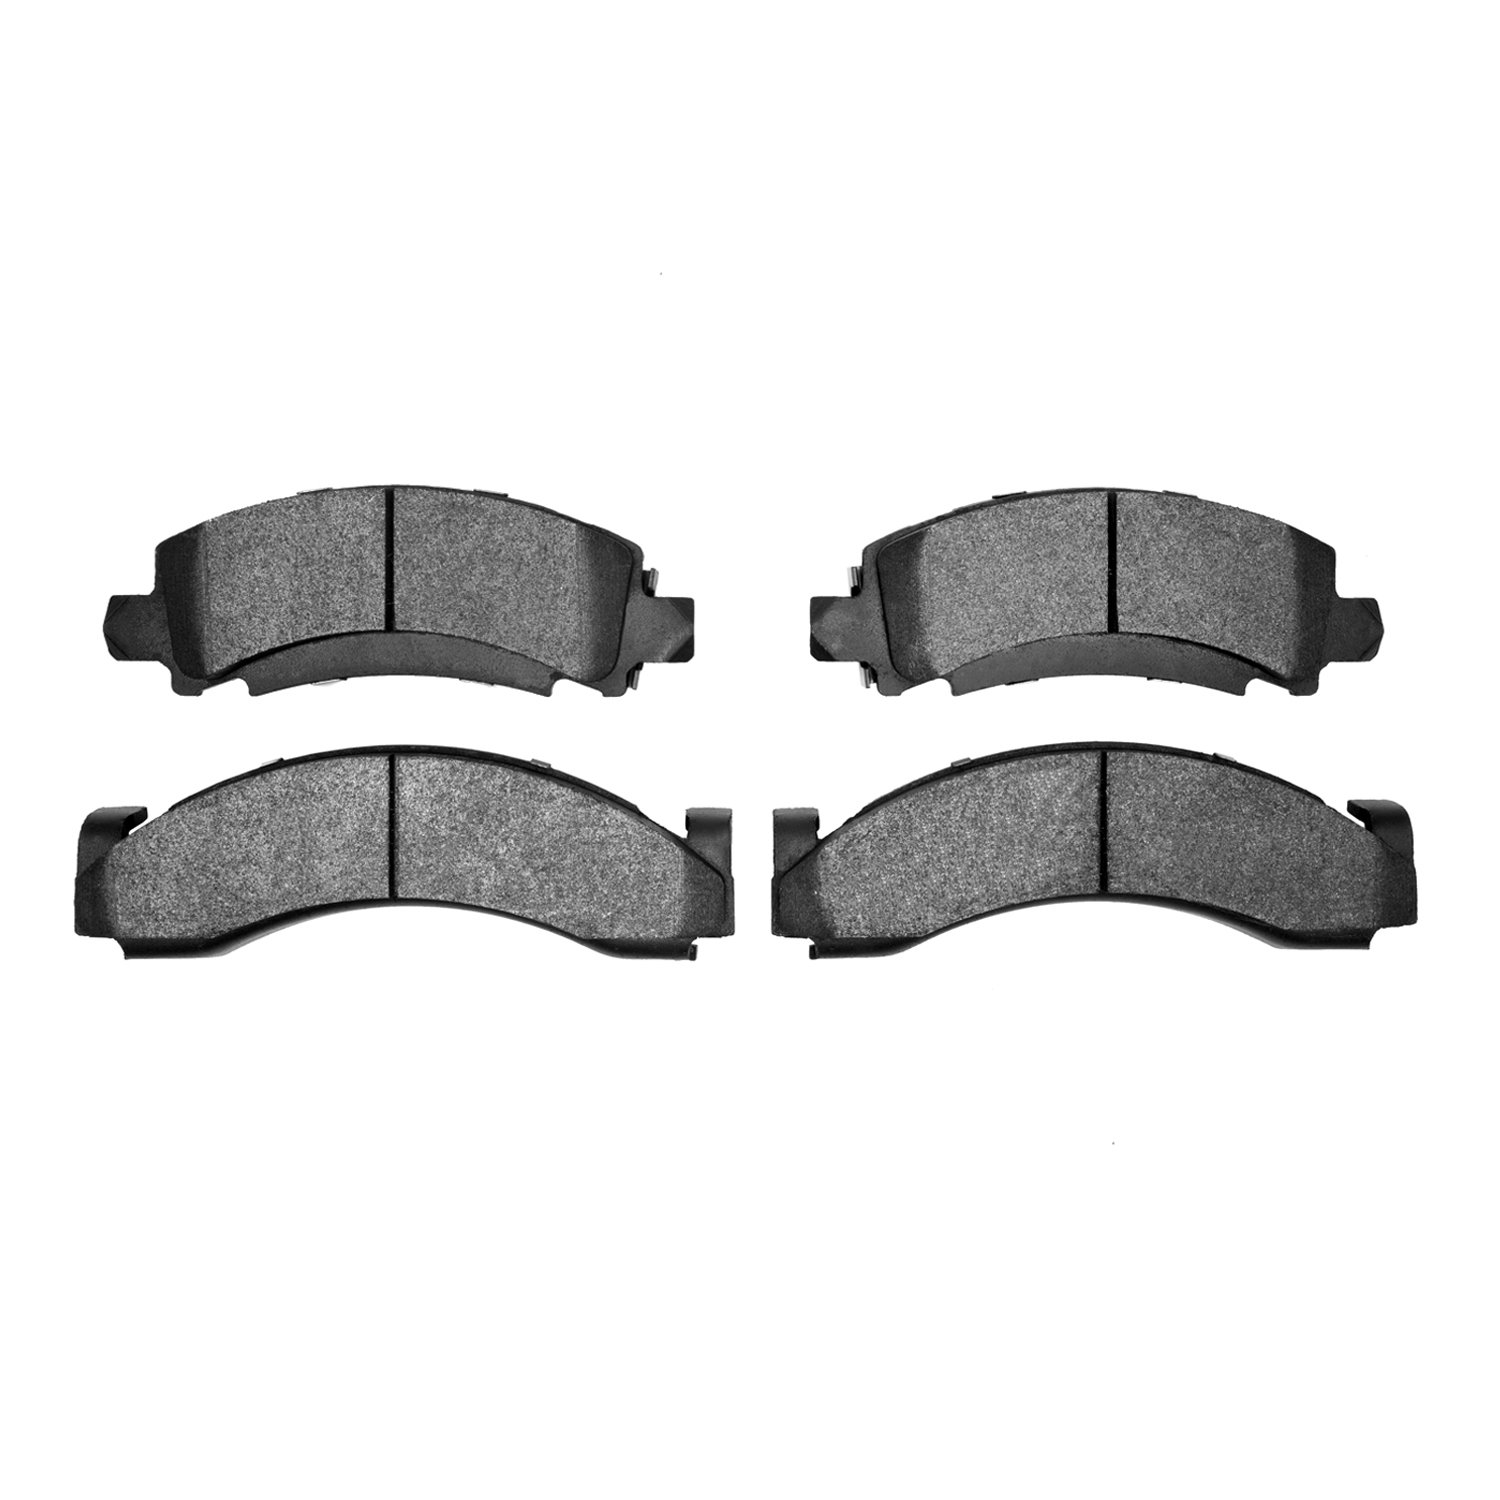 1551-0543-00 5000 Advanced Semi-Metallic Brake Pads, 1971-2006 Multiple Makes/Models, Position: Rr,Rear,Front,Fr